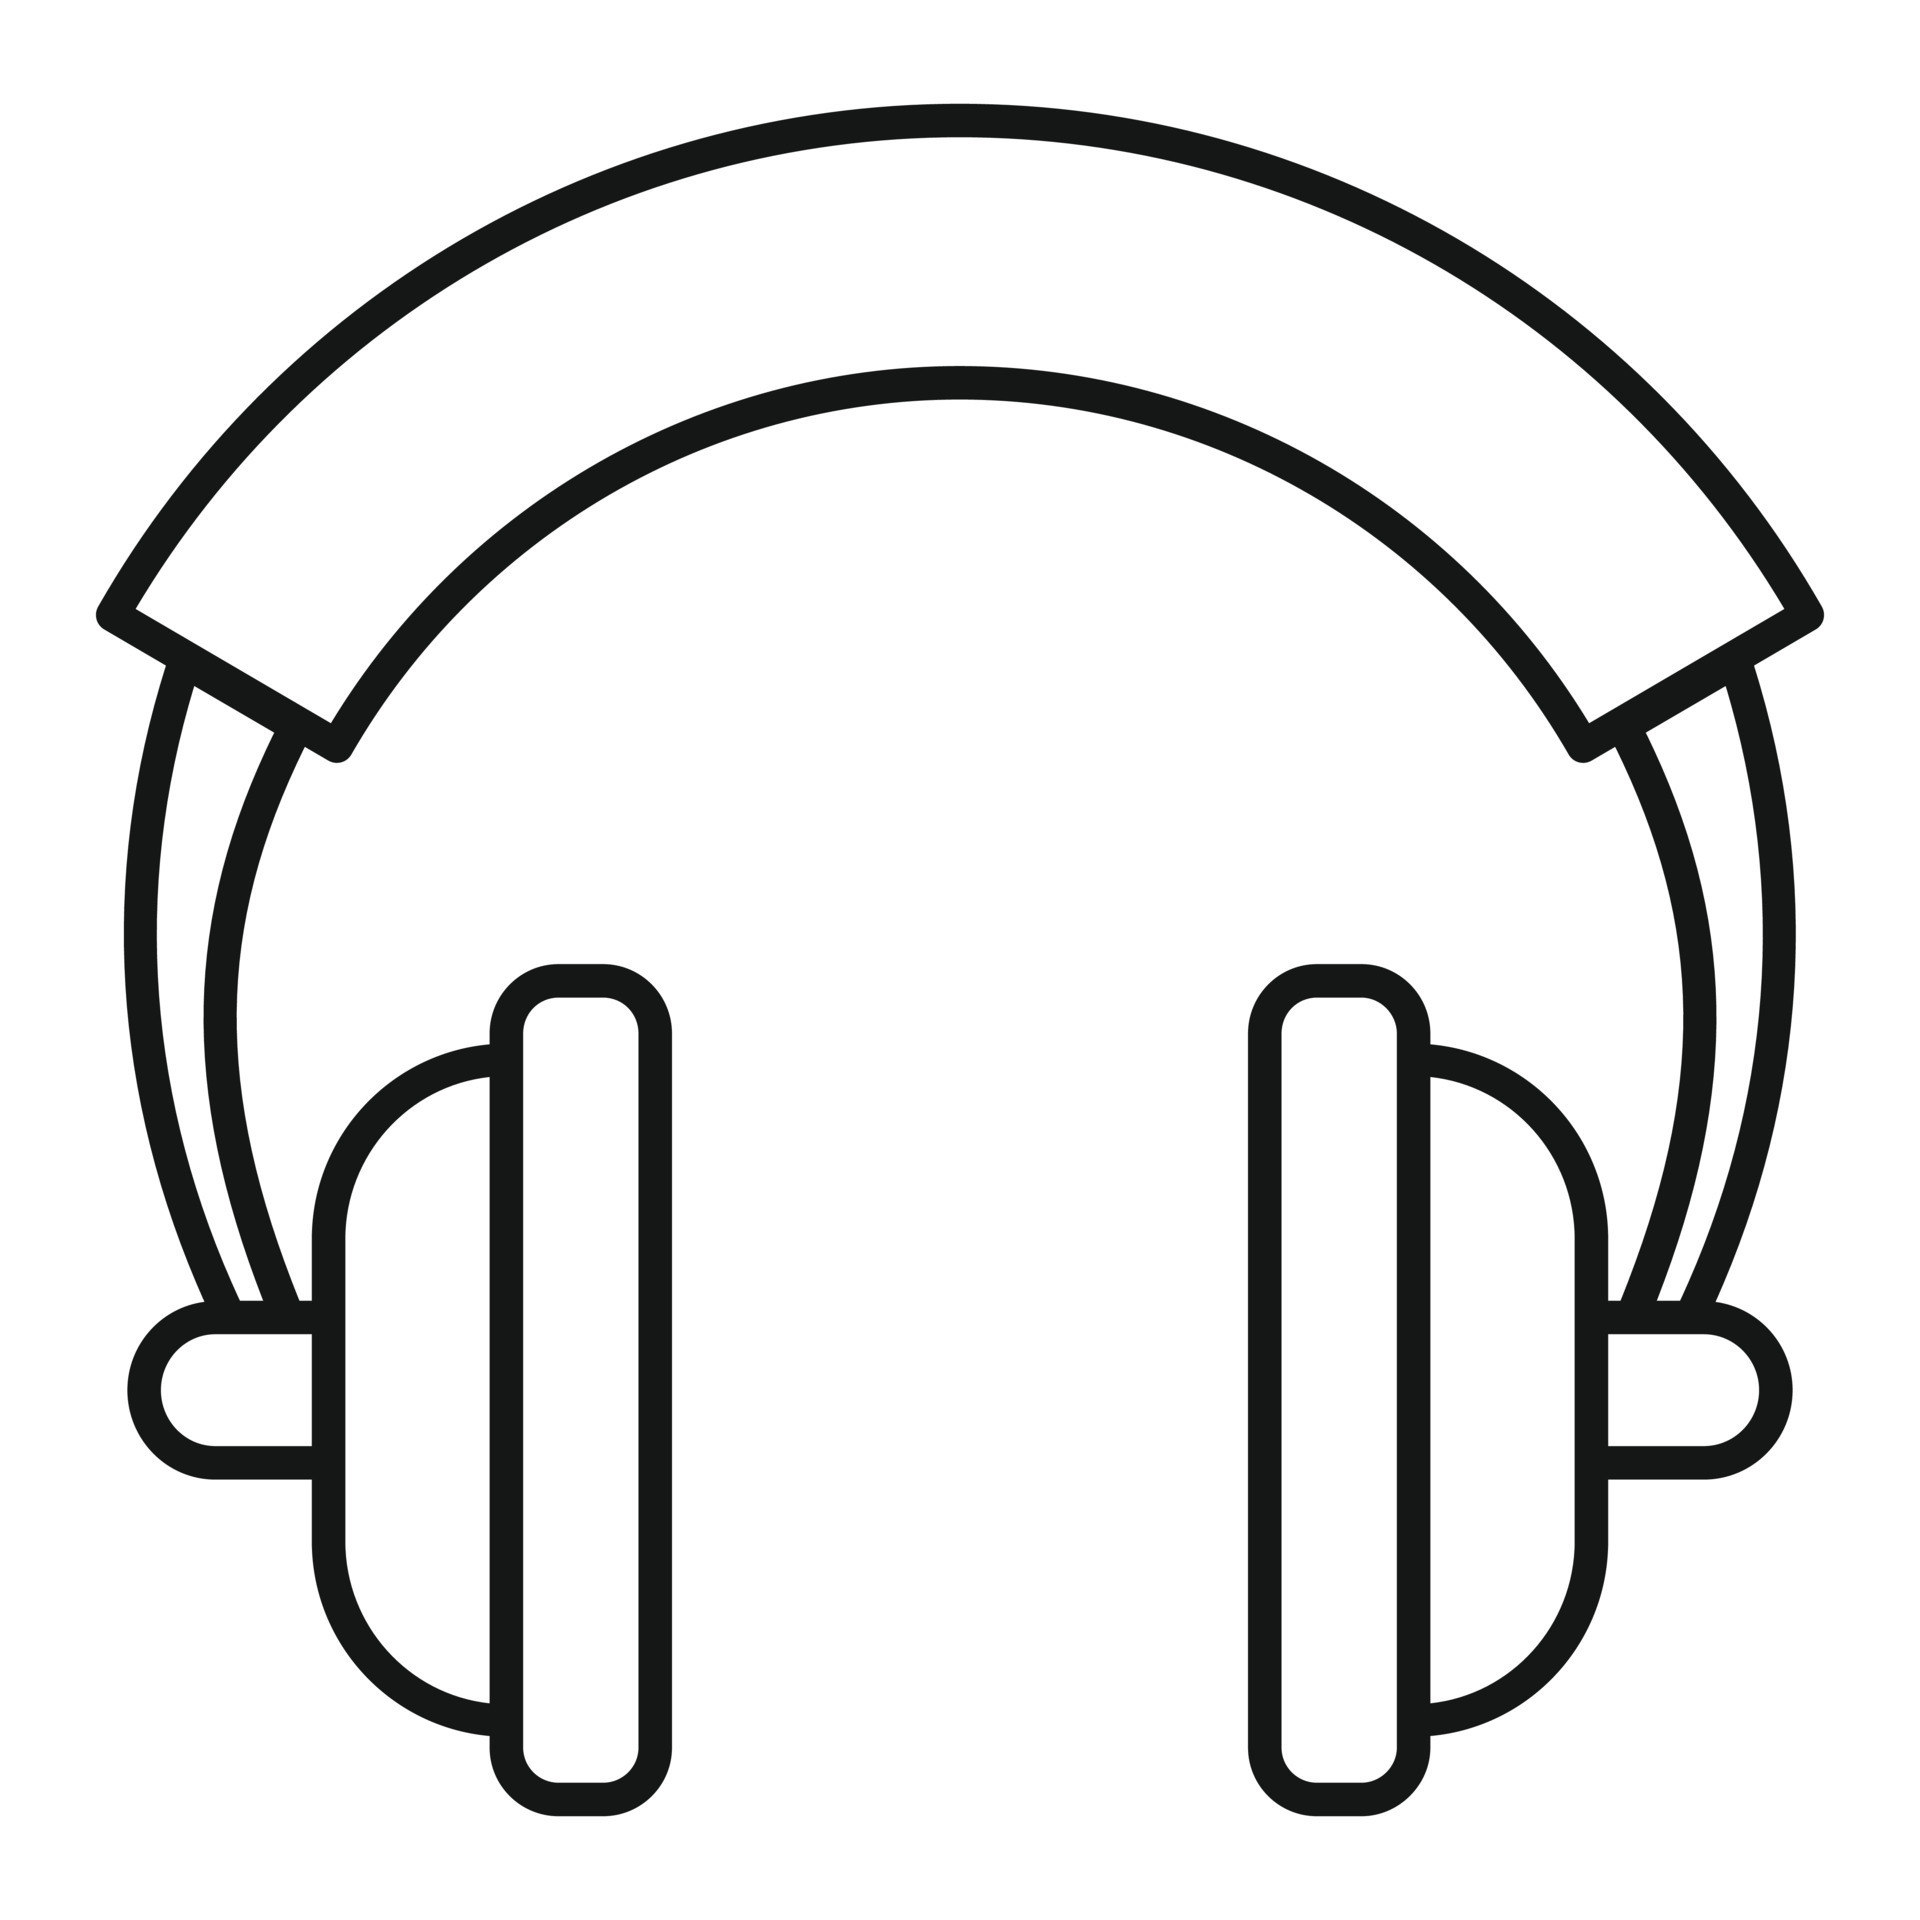 icono de auriculares dj, estilo de esquema 14623546 Vector en Vecteezy